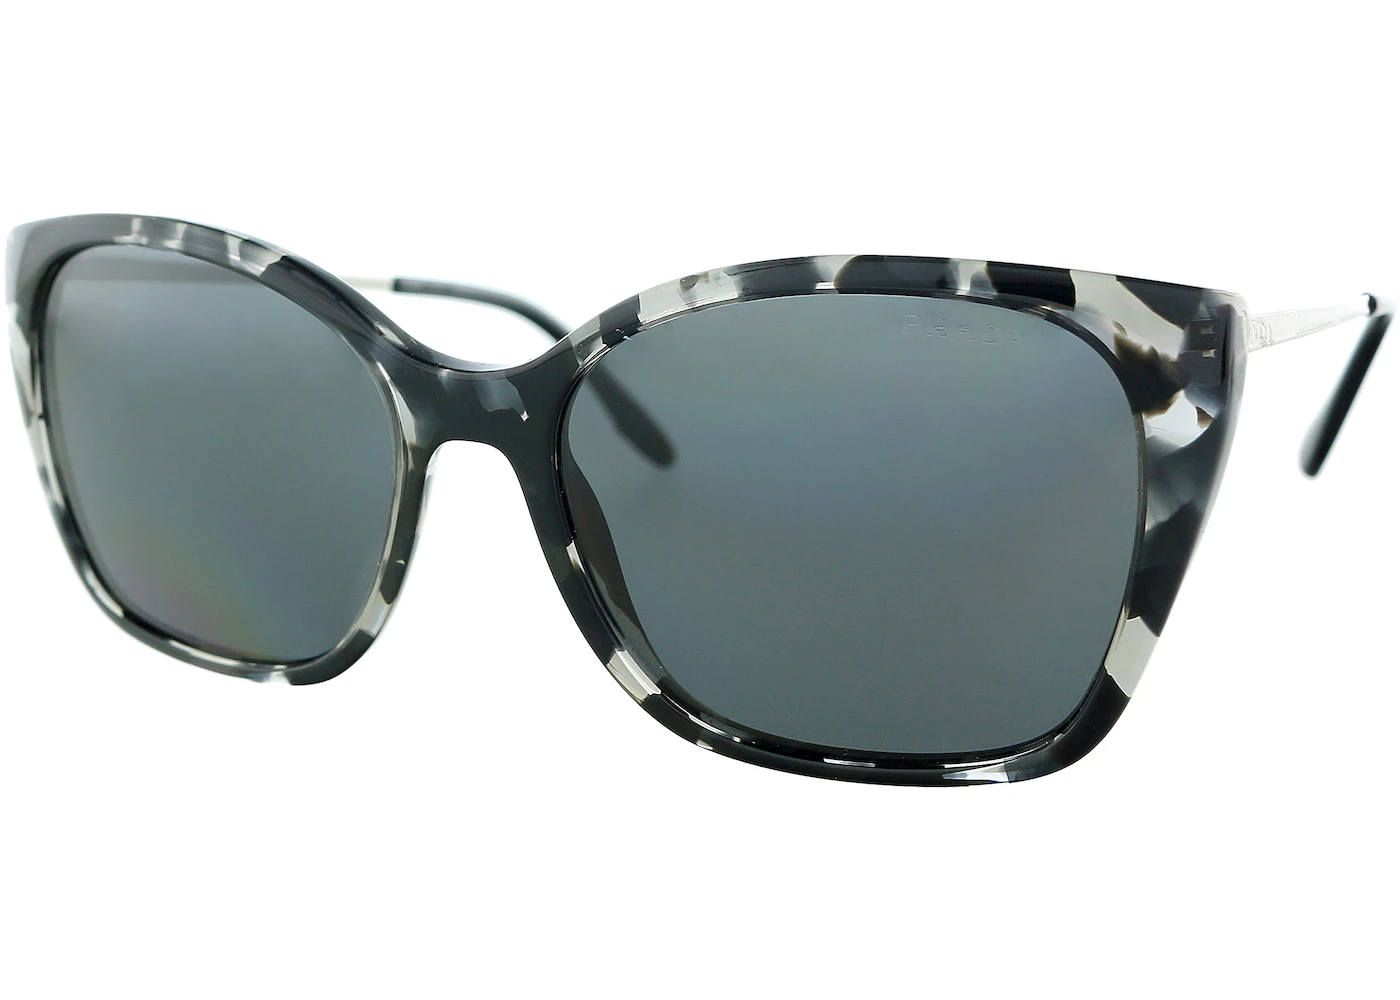 Prada Cateye Sunglasses Grey Tortoise (0PR 12XS 5285S0) in Acetate with ...